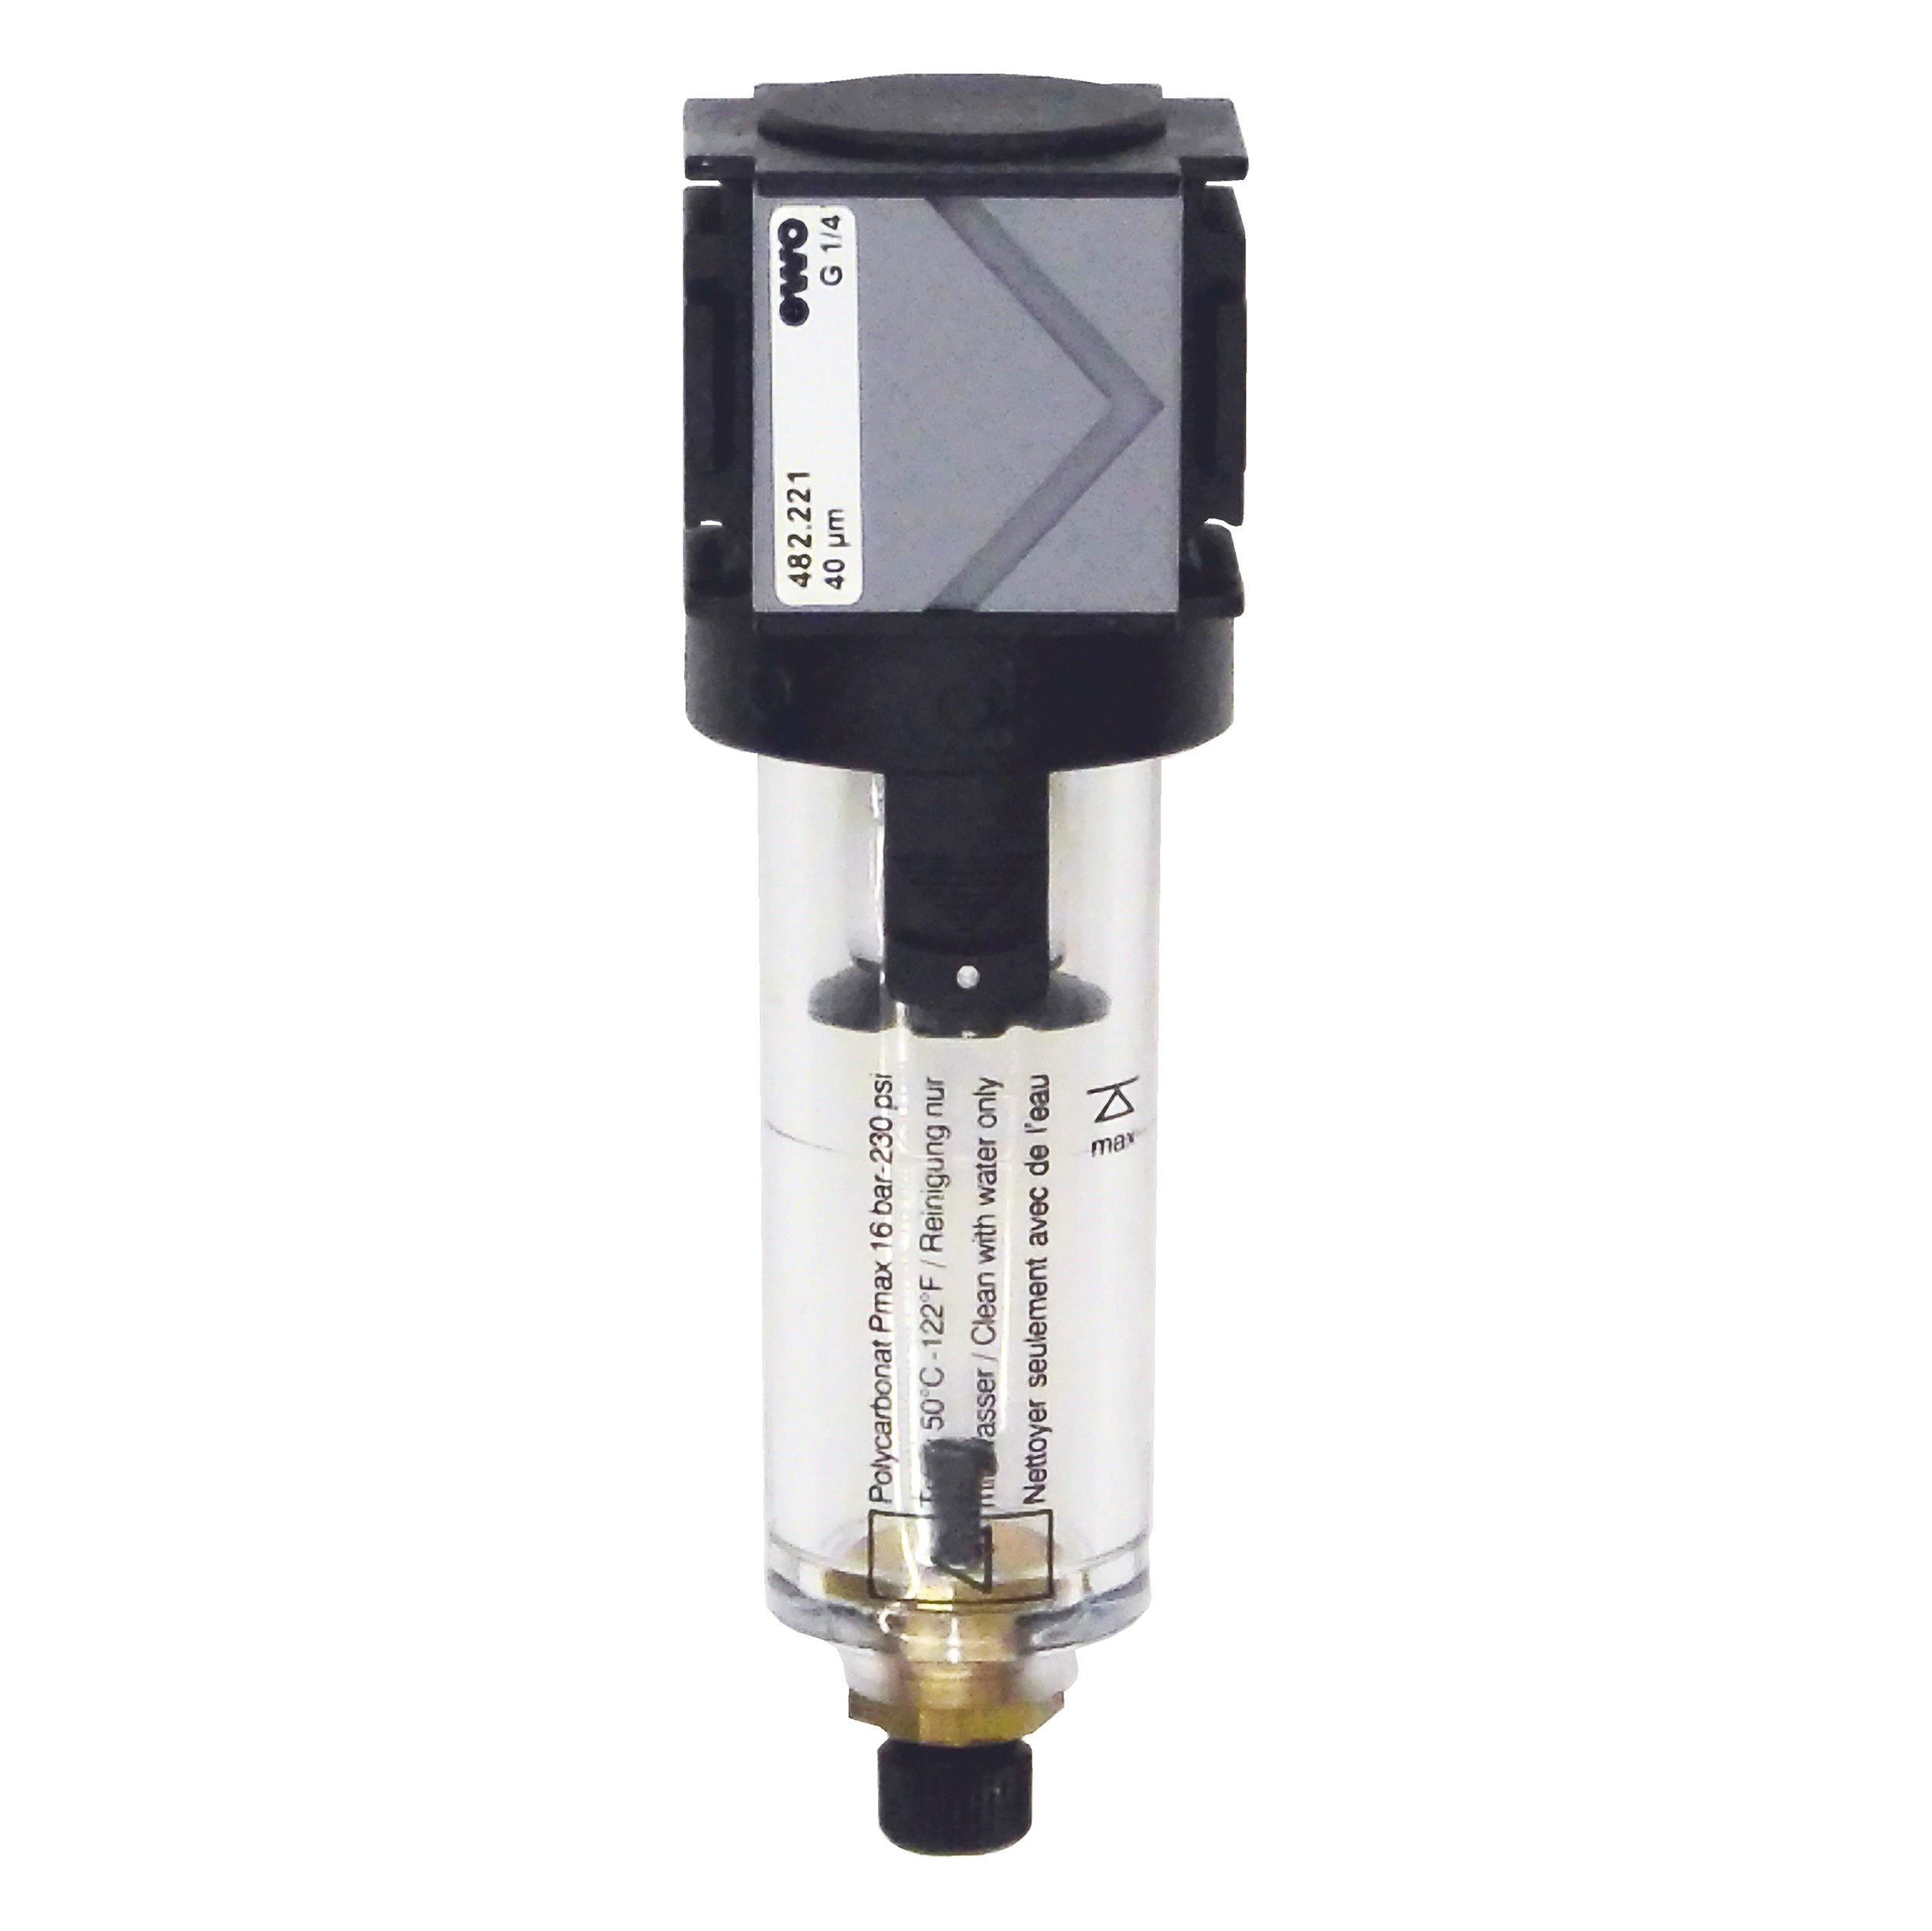 Druckluftfilter Typ 482 variobloc, G⅜, BG 30, Handablassventil, Filtereinsatz: 40 µm, p₁: 0–20 bar